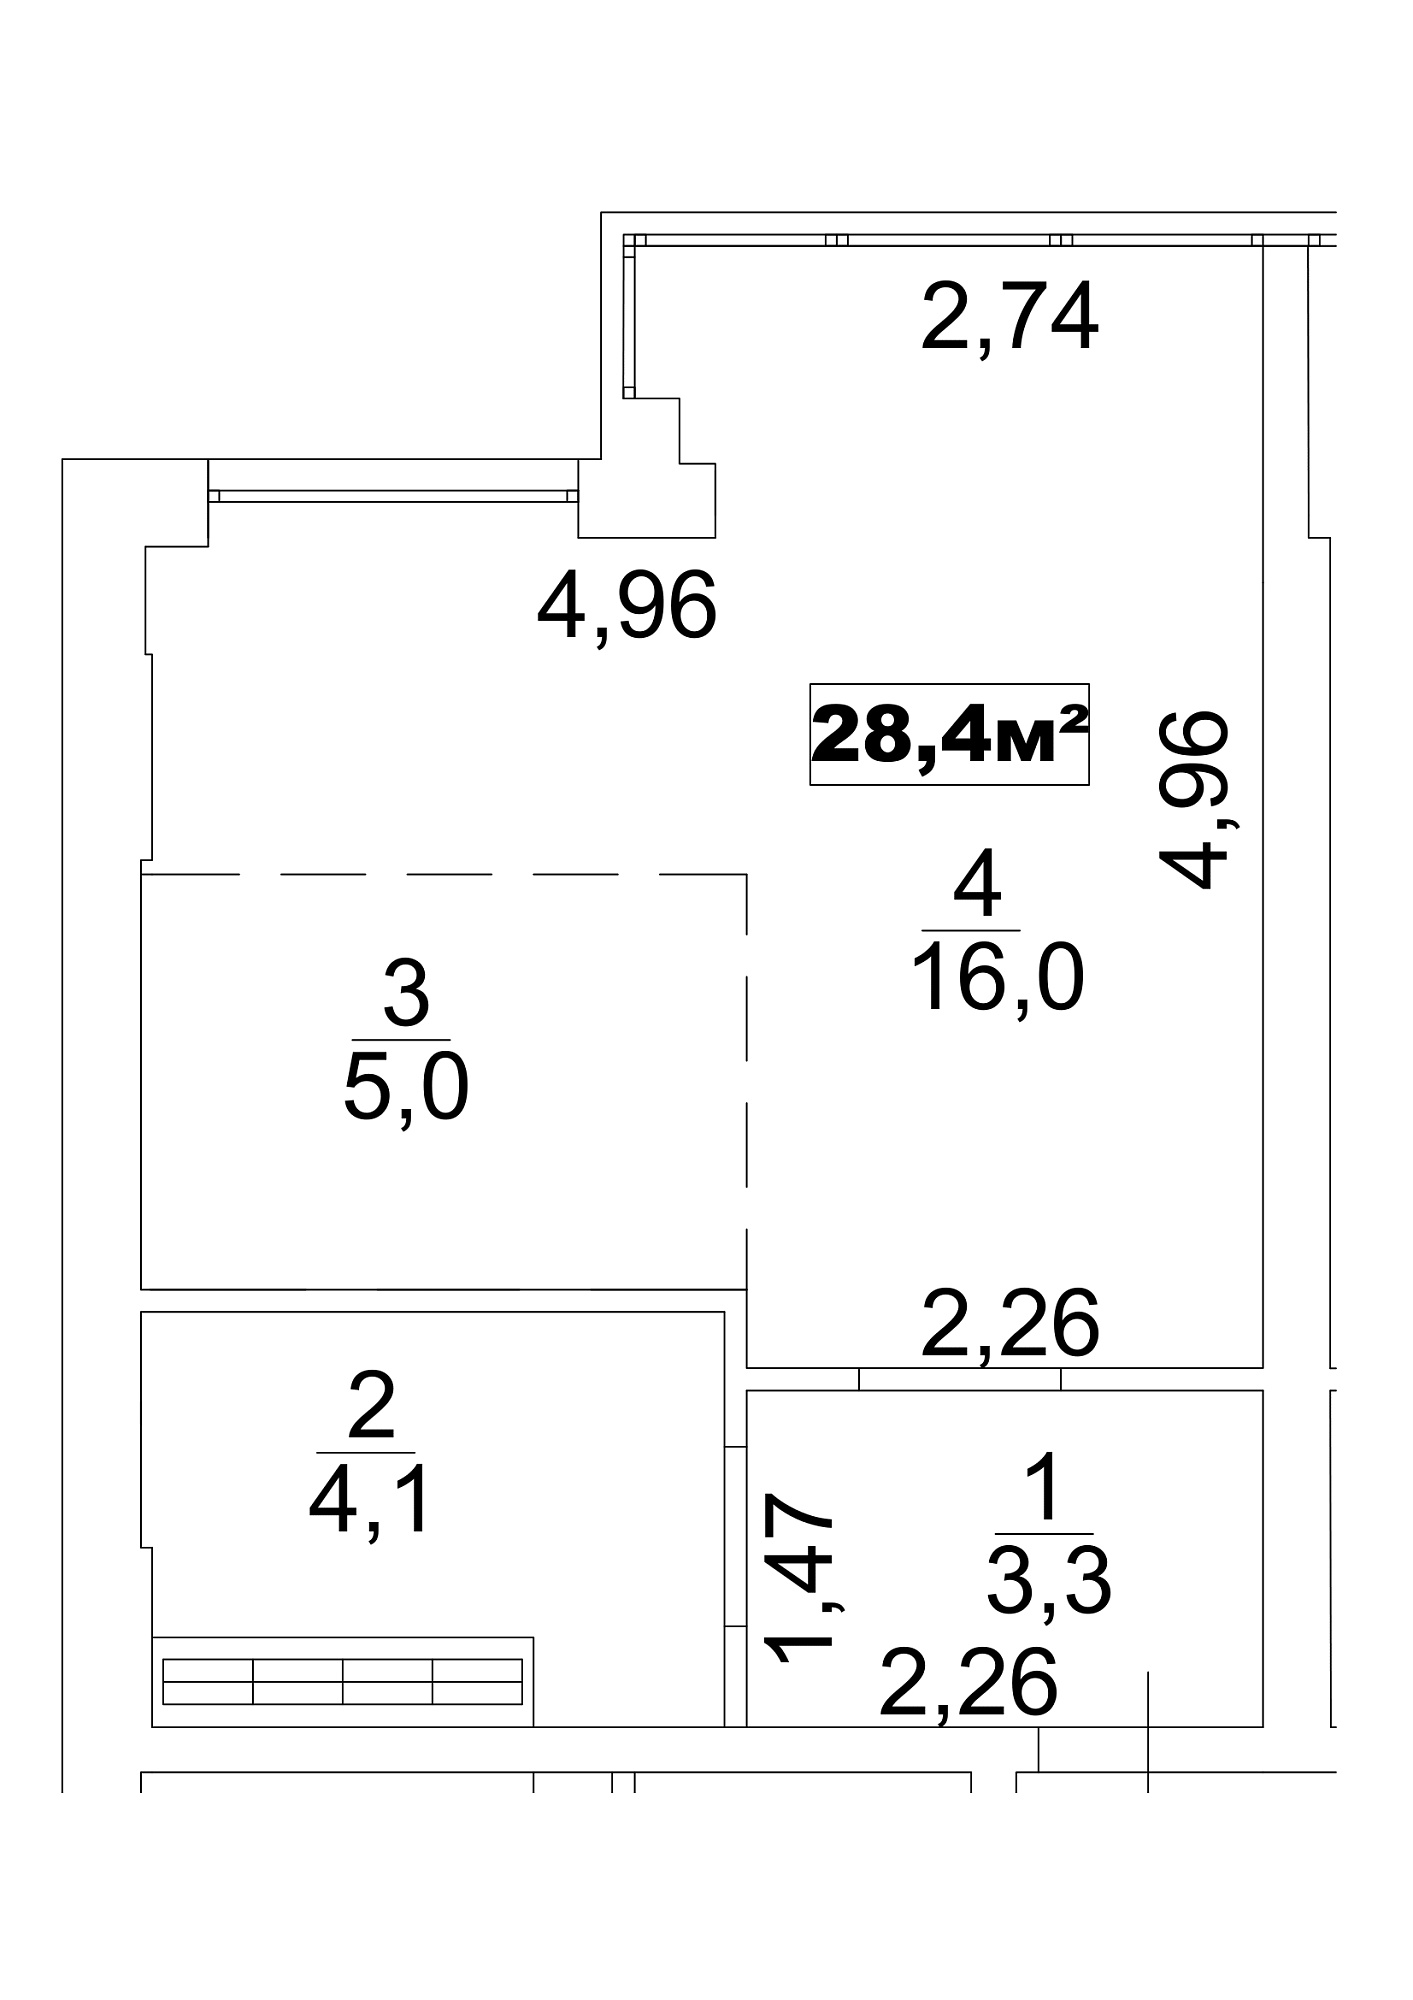 Планировка Smart-квартира площей 28.4м2, AB-13-05/0036б.